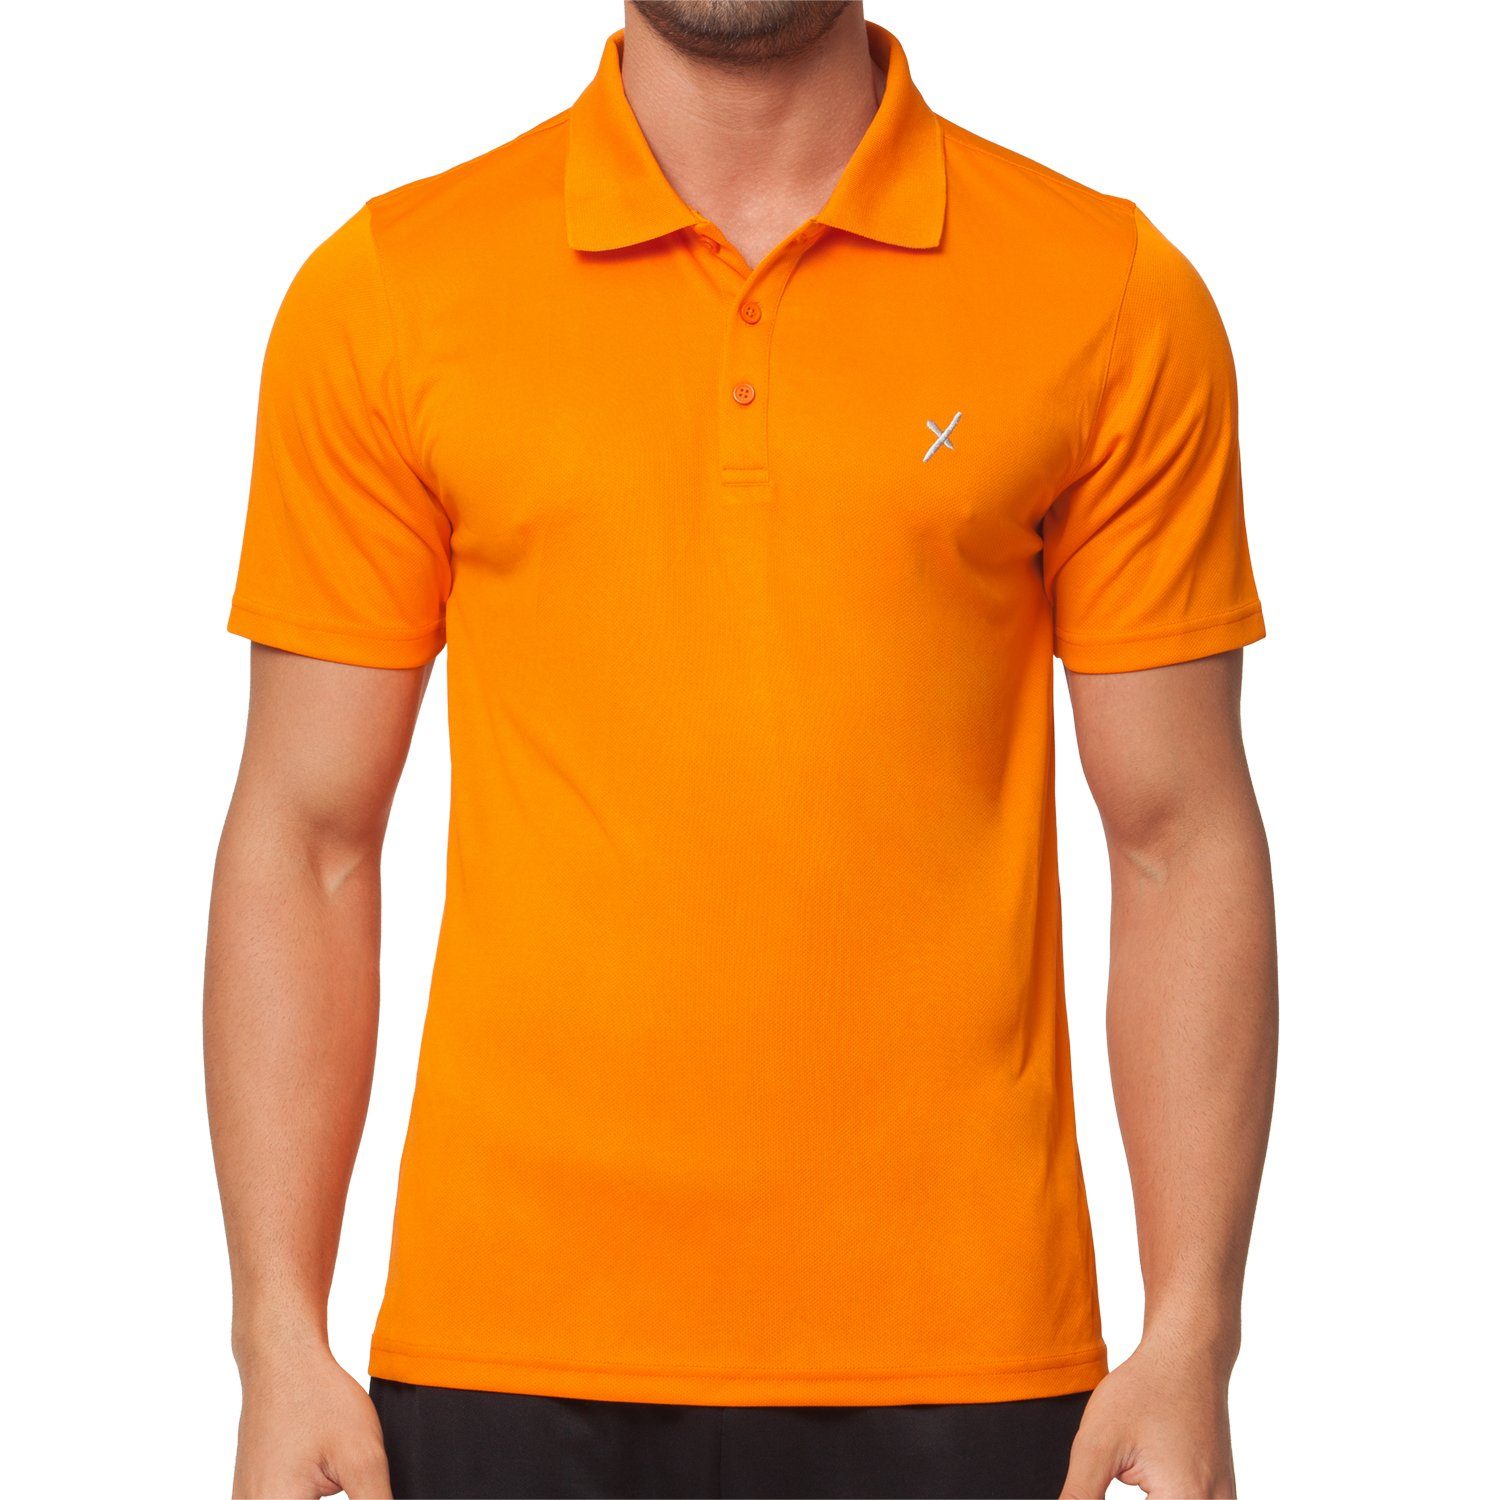 CFLEX Trainingsshirt Herren Sport Shirt Fitness Polo-Shirt Sportswear Collection Orange